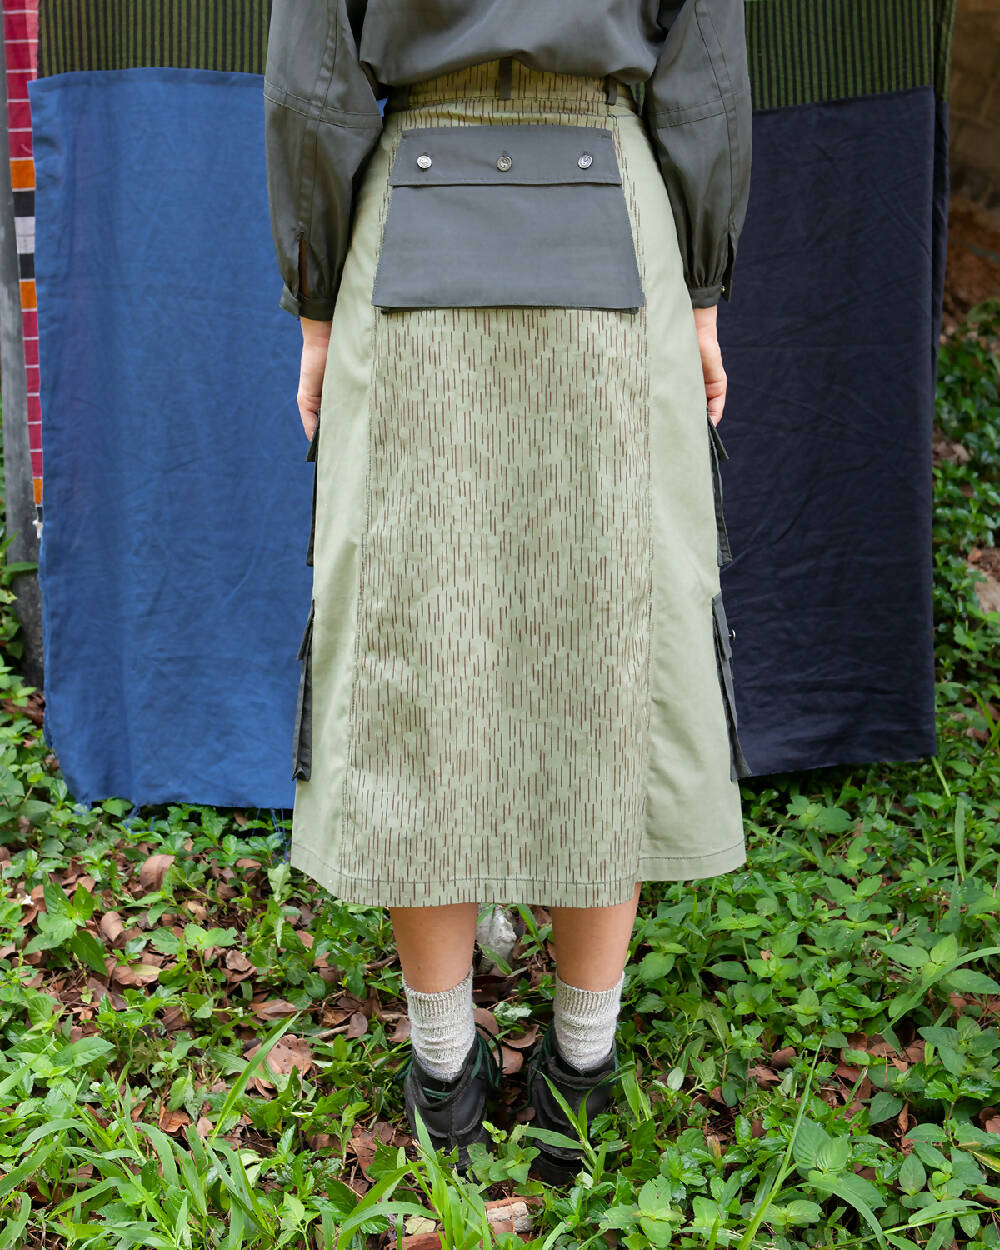 W'menswear Fly Pocket Skirt in Rain Camo